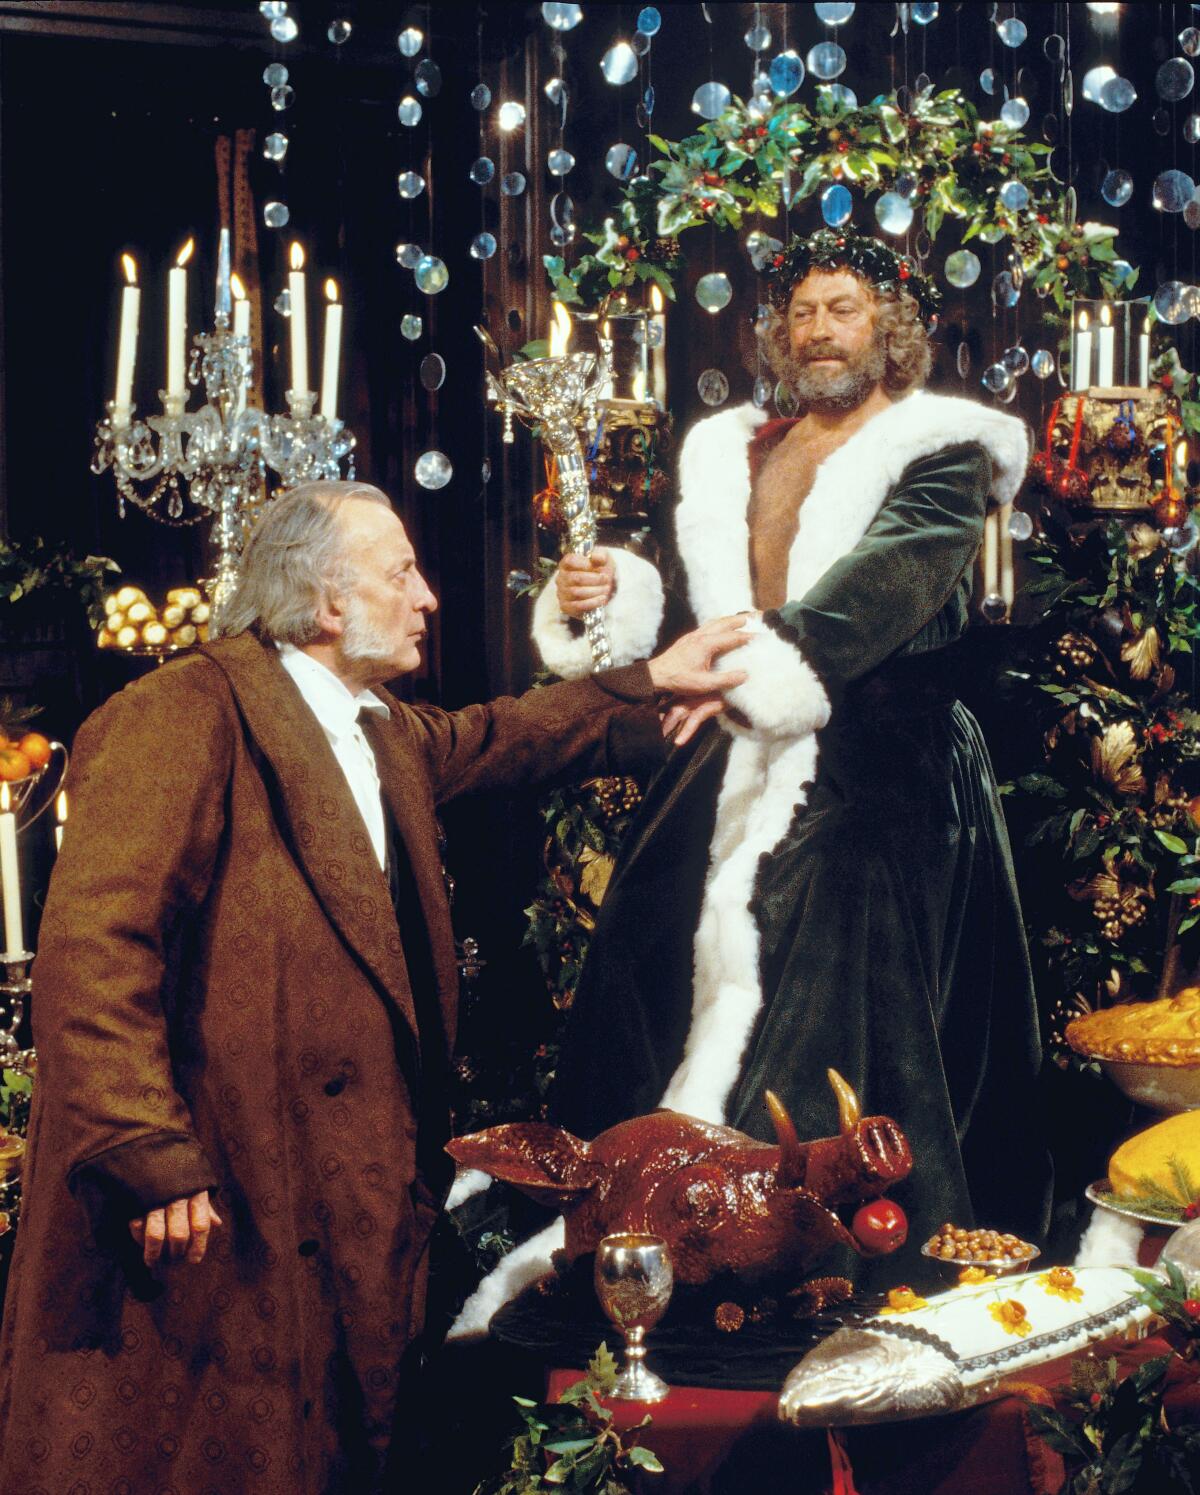 George C. Scott, left, and Edward Woodward  in “A Christmas Carol” (1984)